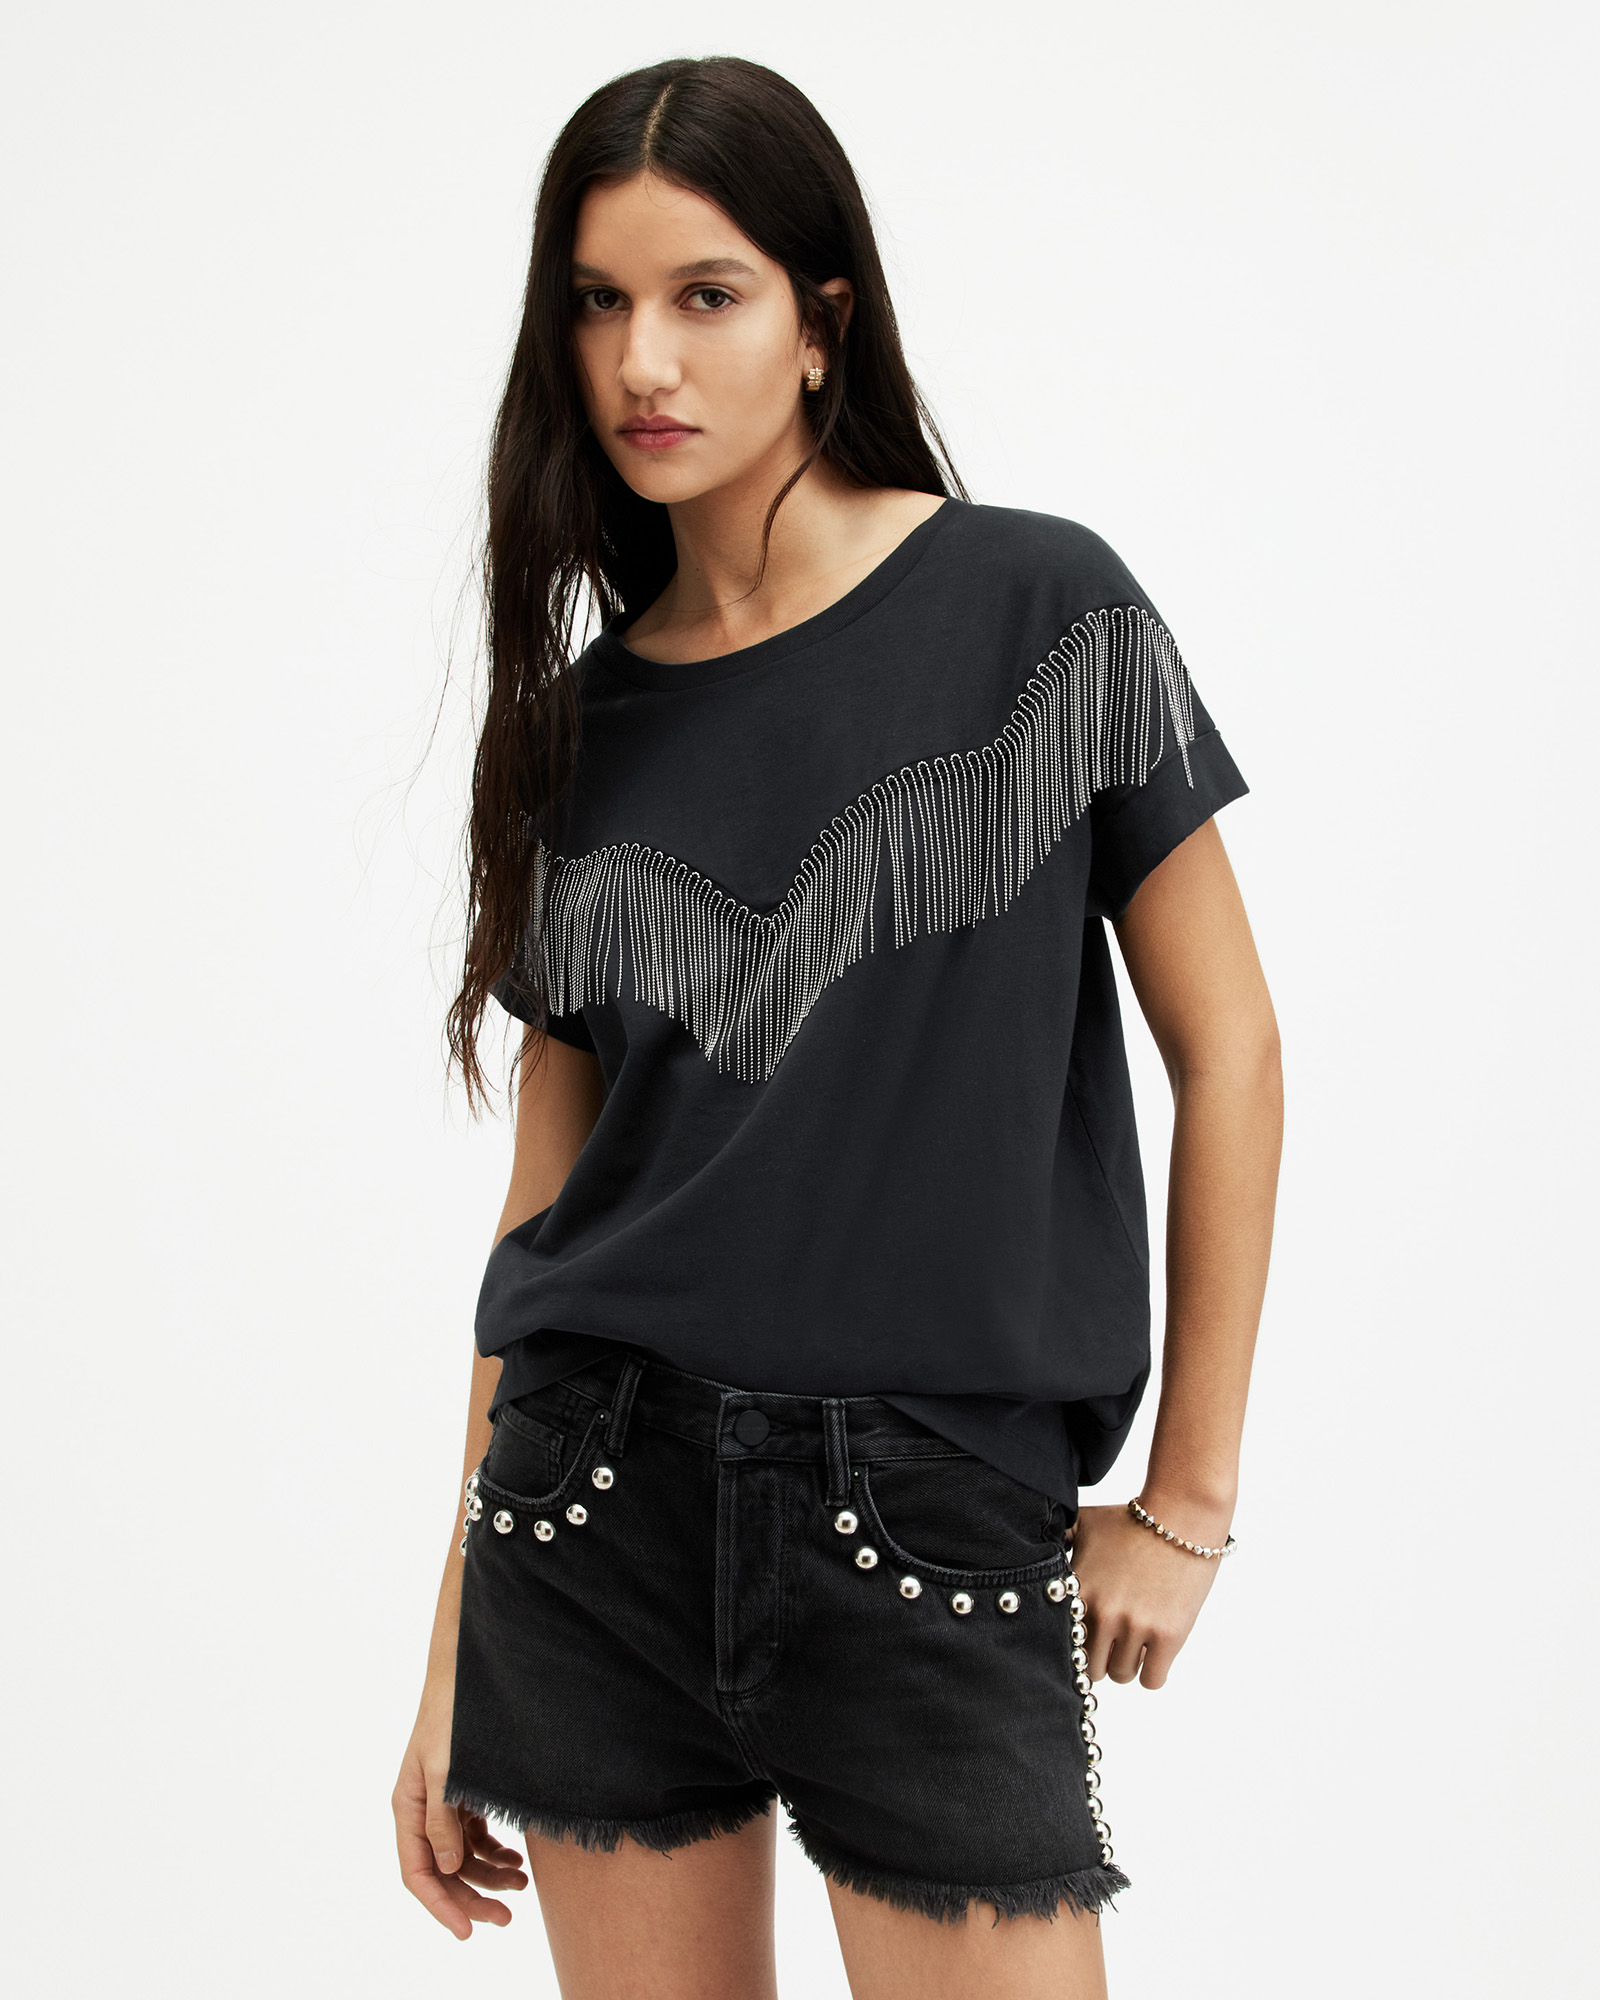 Imogen Boy Tassel Front T-Shirt Black | ALLSAINTS US